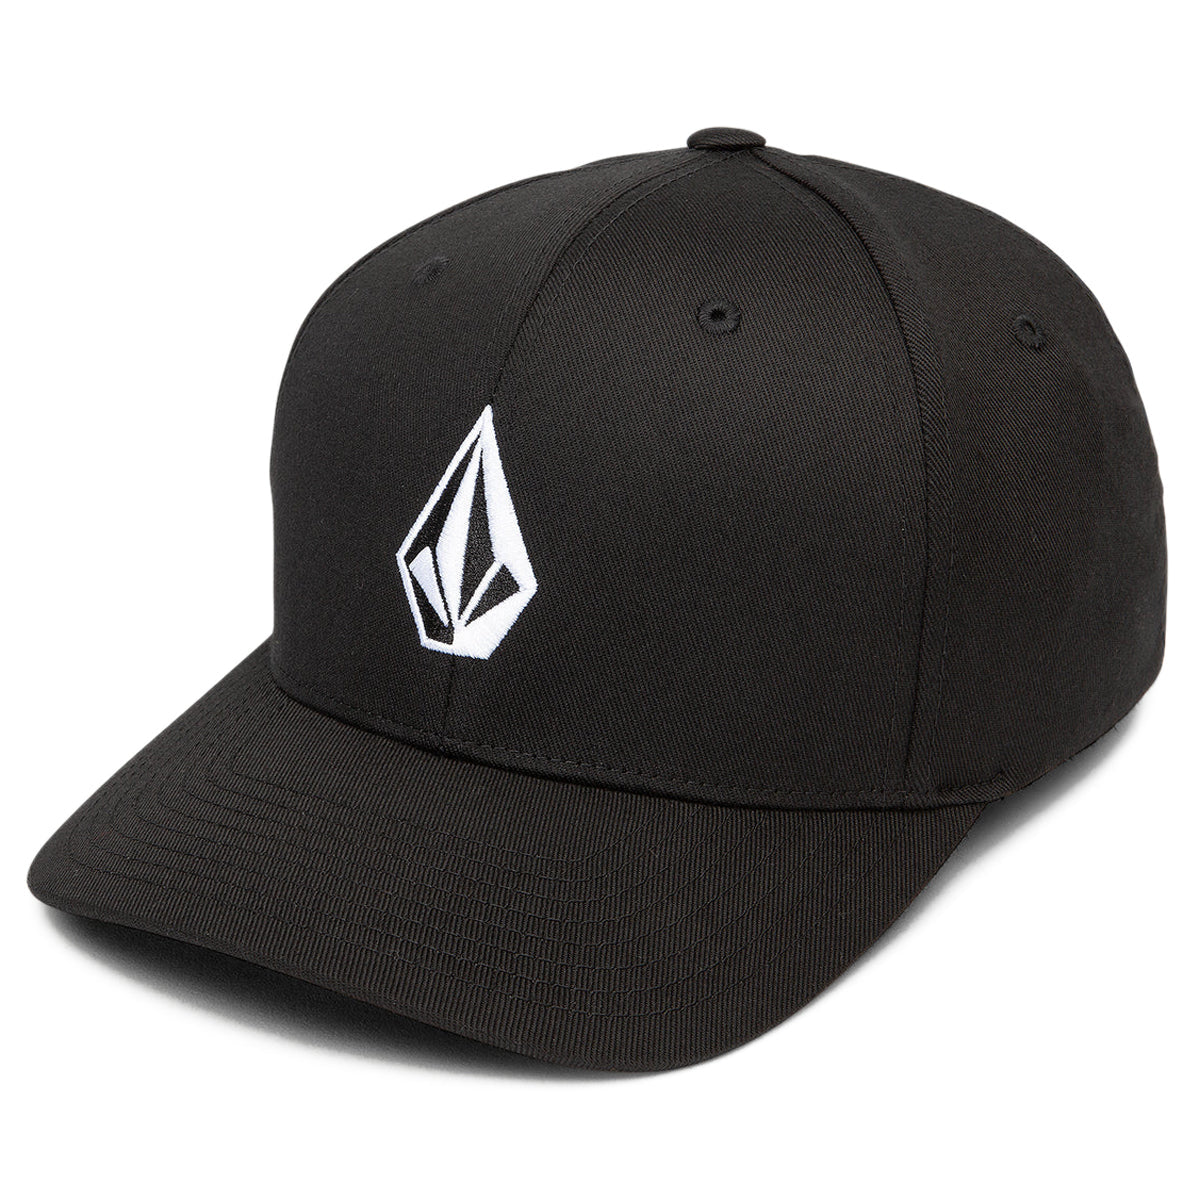 Volcom Full Stone Flexfit Hat - Black image 1